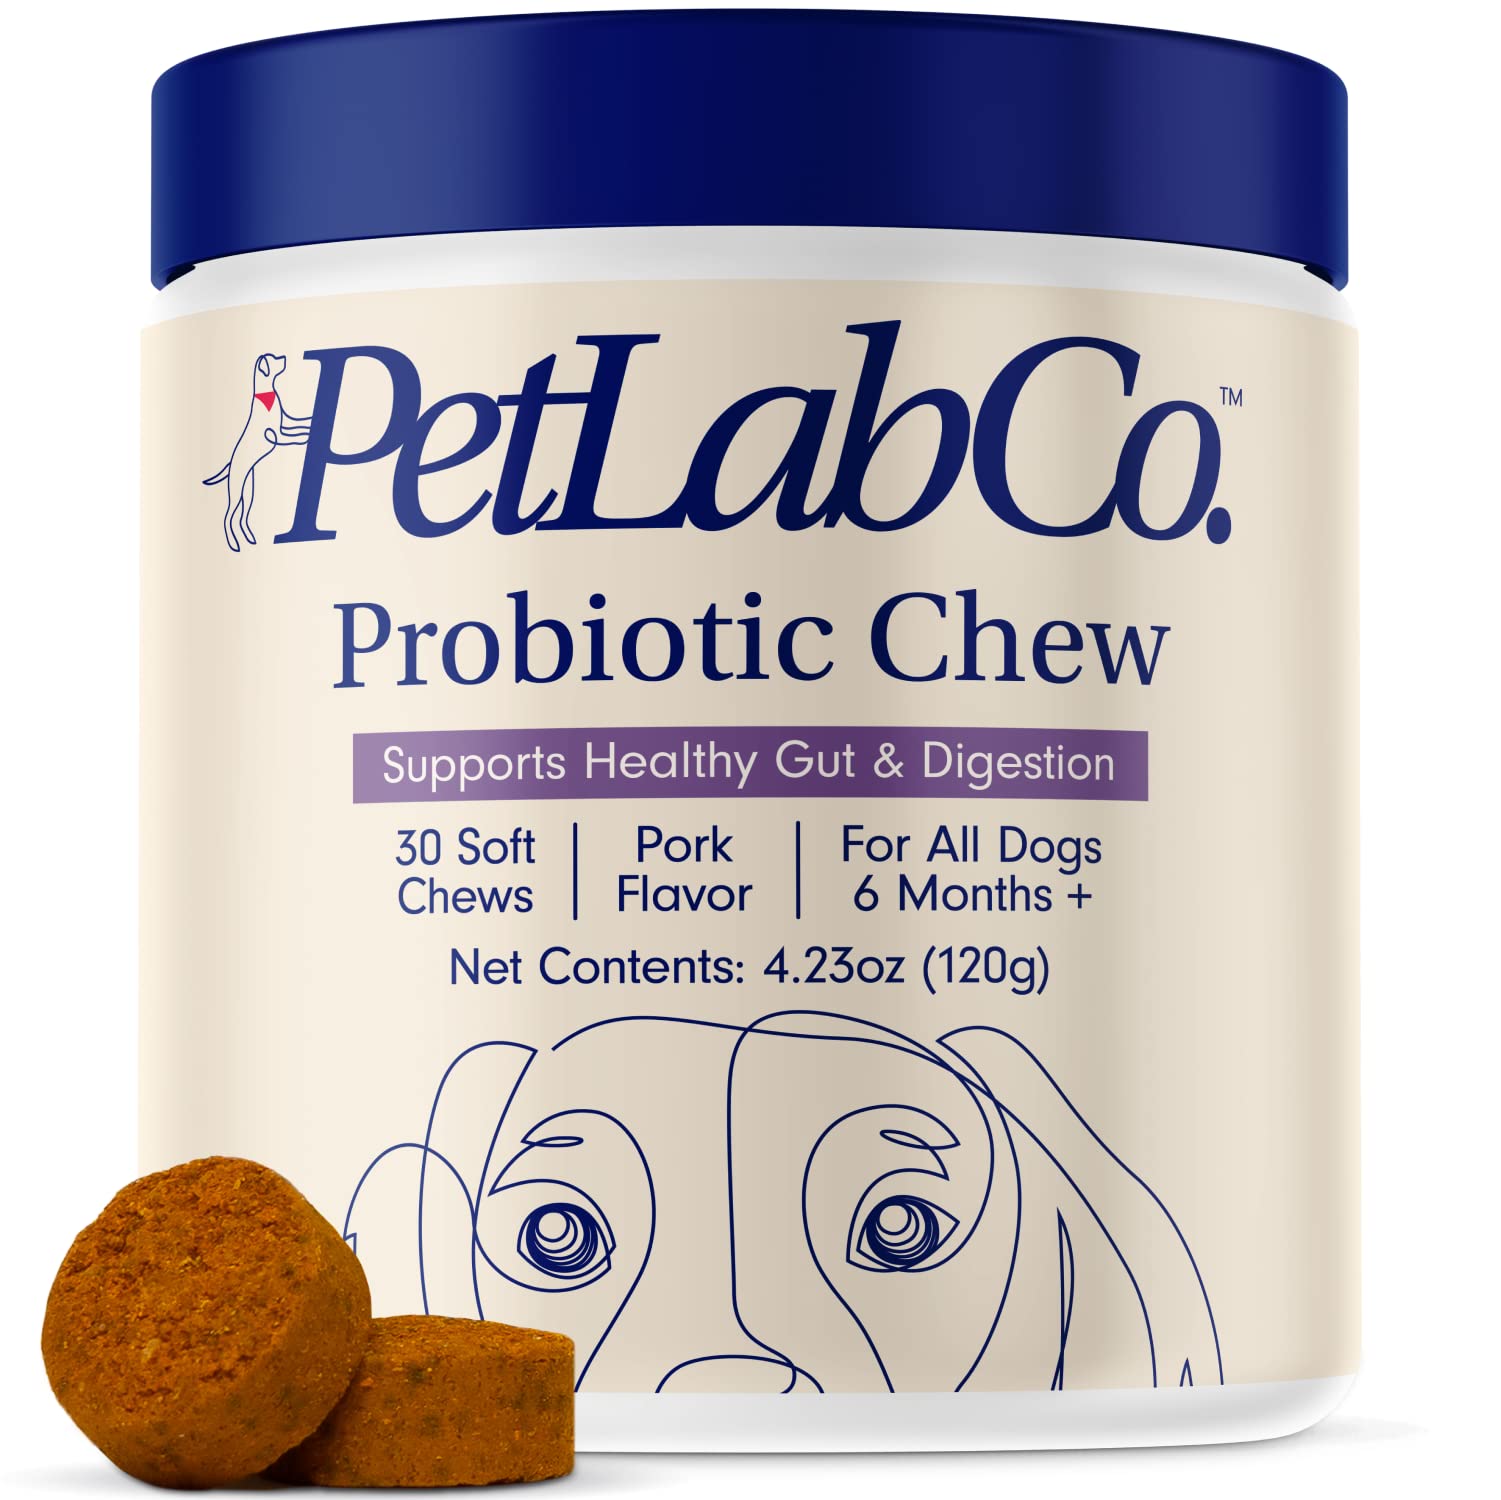 Petlab Co. Probiotic Chew